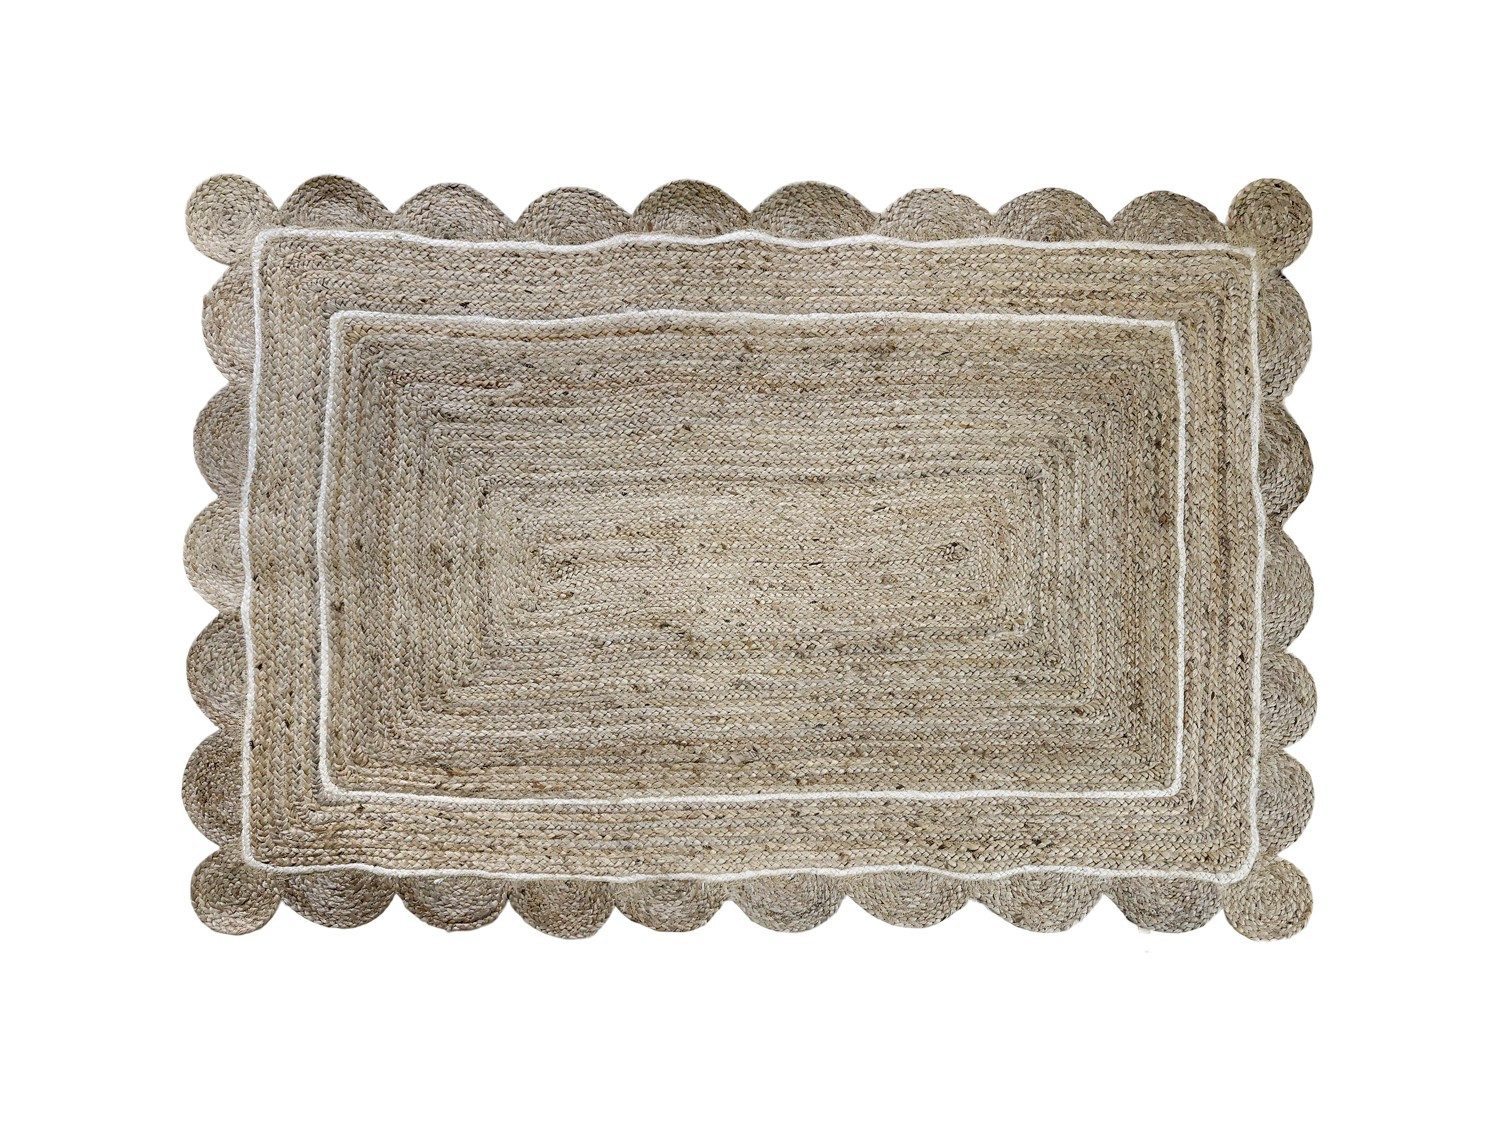 Teppich Chic Antique Teppich aus Jute mit Muster L180/B120 cm natur, Annimuck